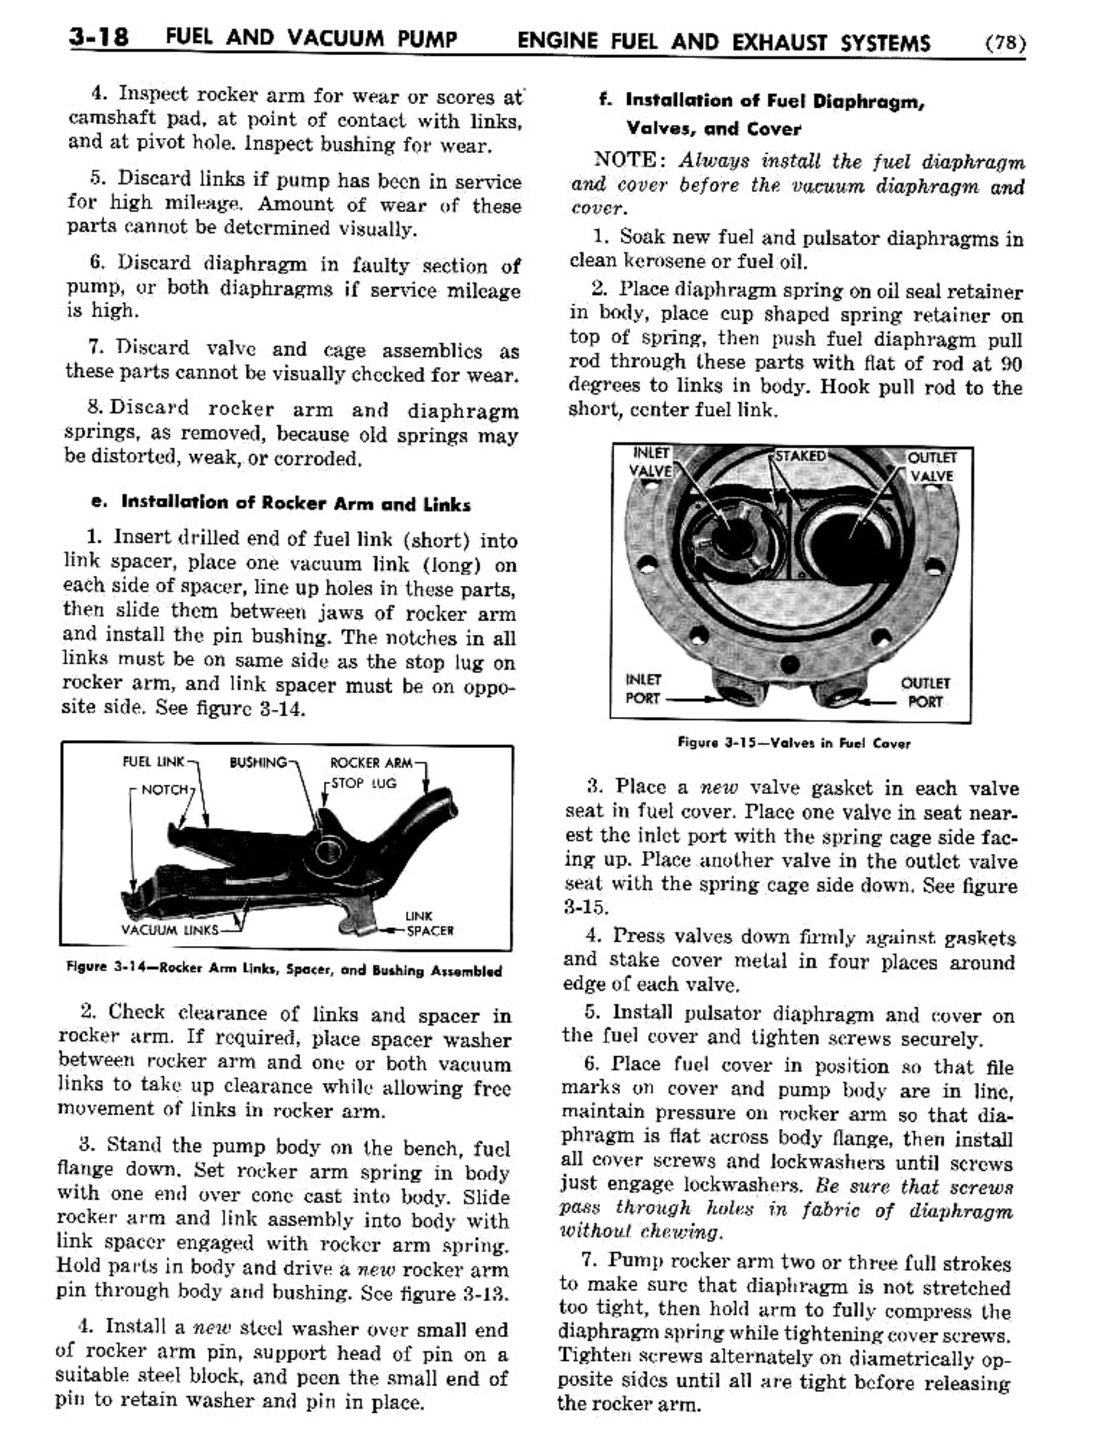 n_04 1954 Buick Shop Manual - Engine Fuel & Exhaust-018-018.jpg